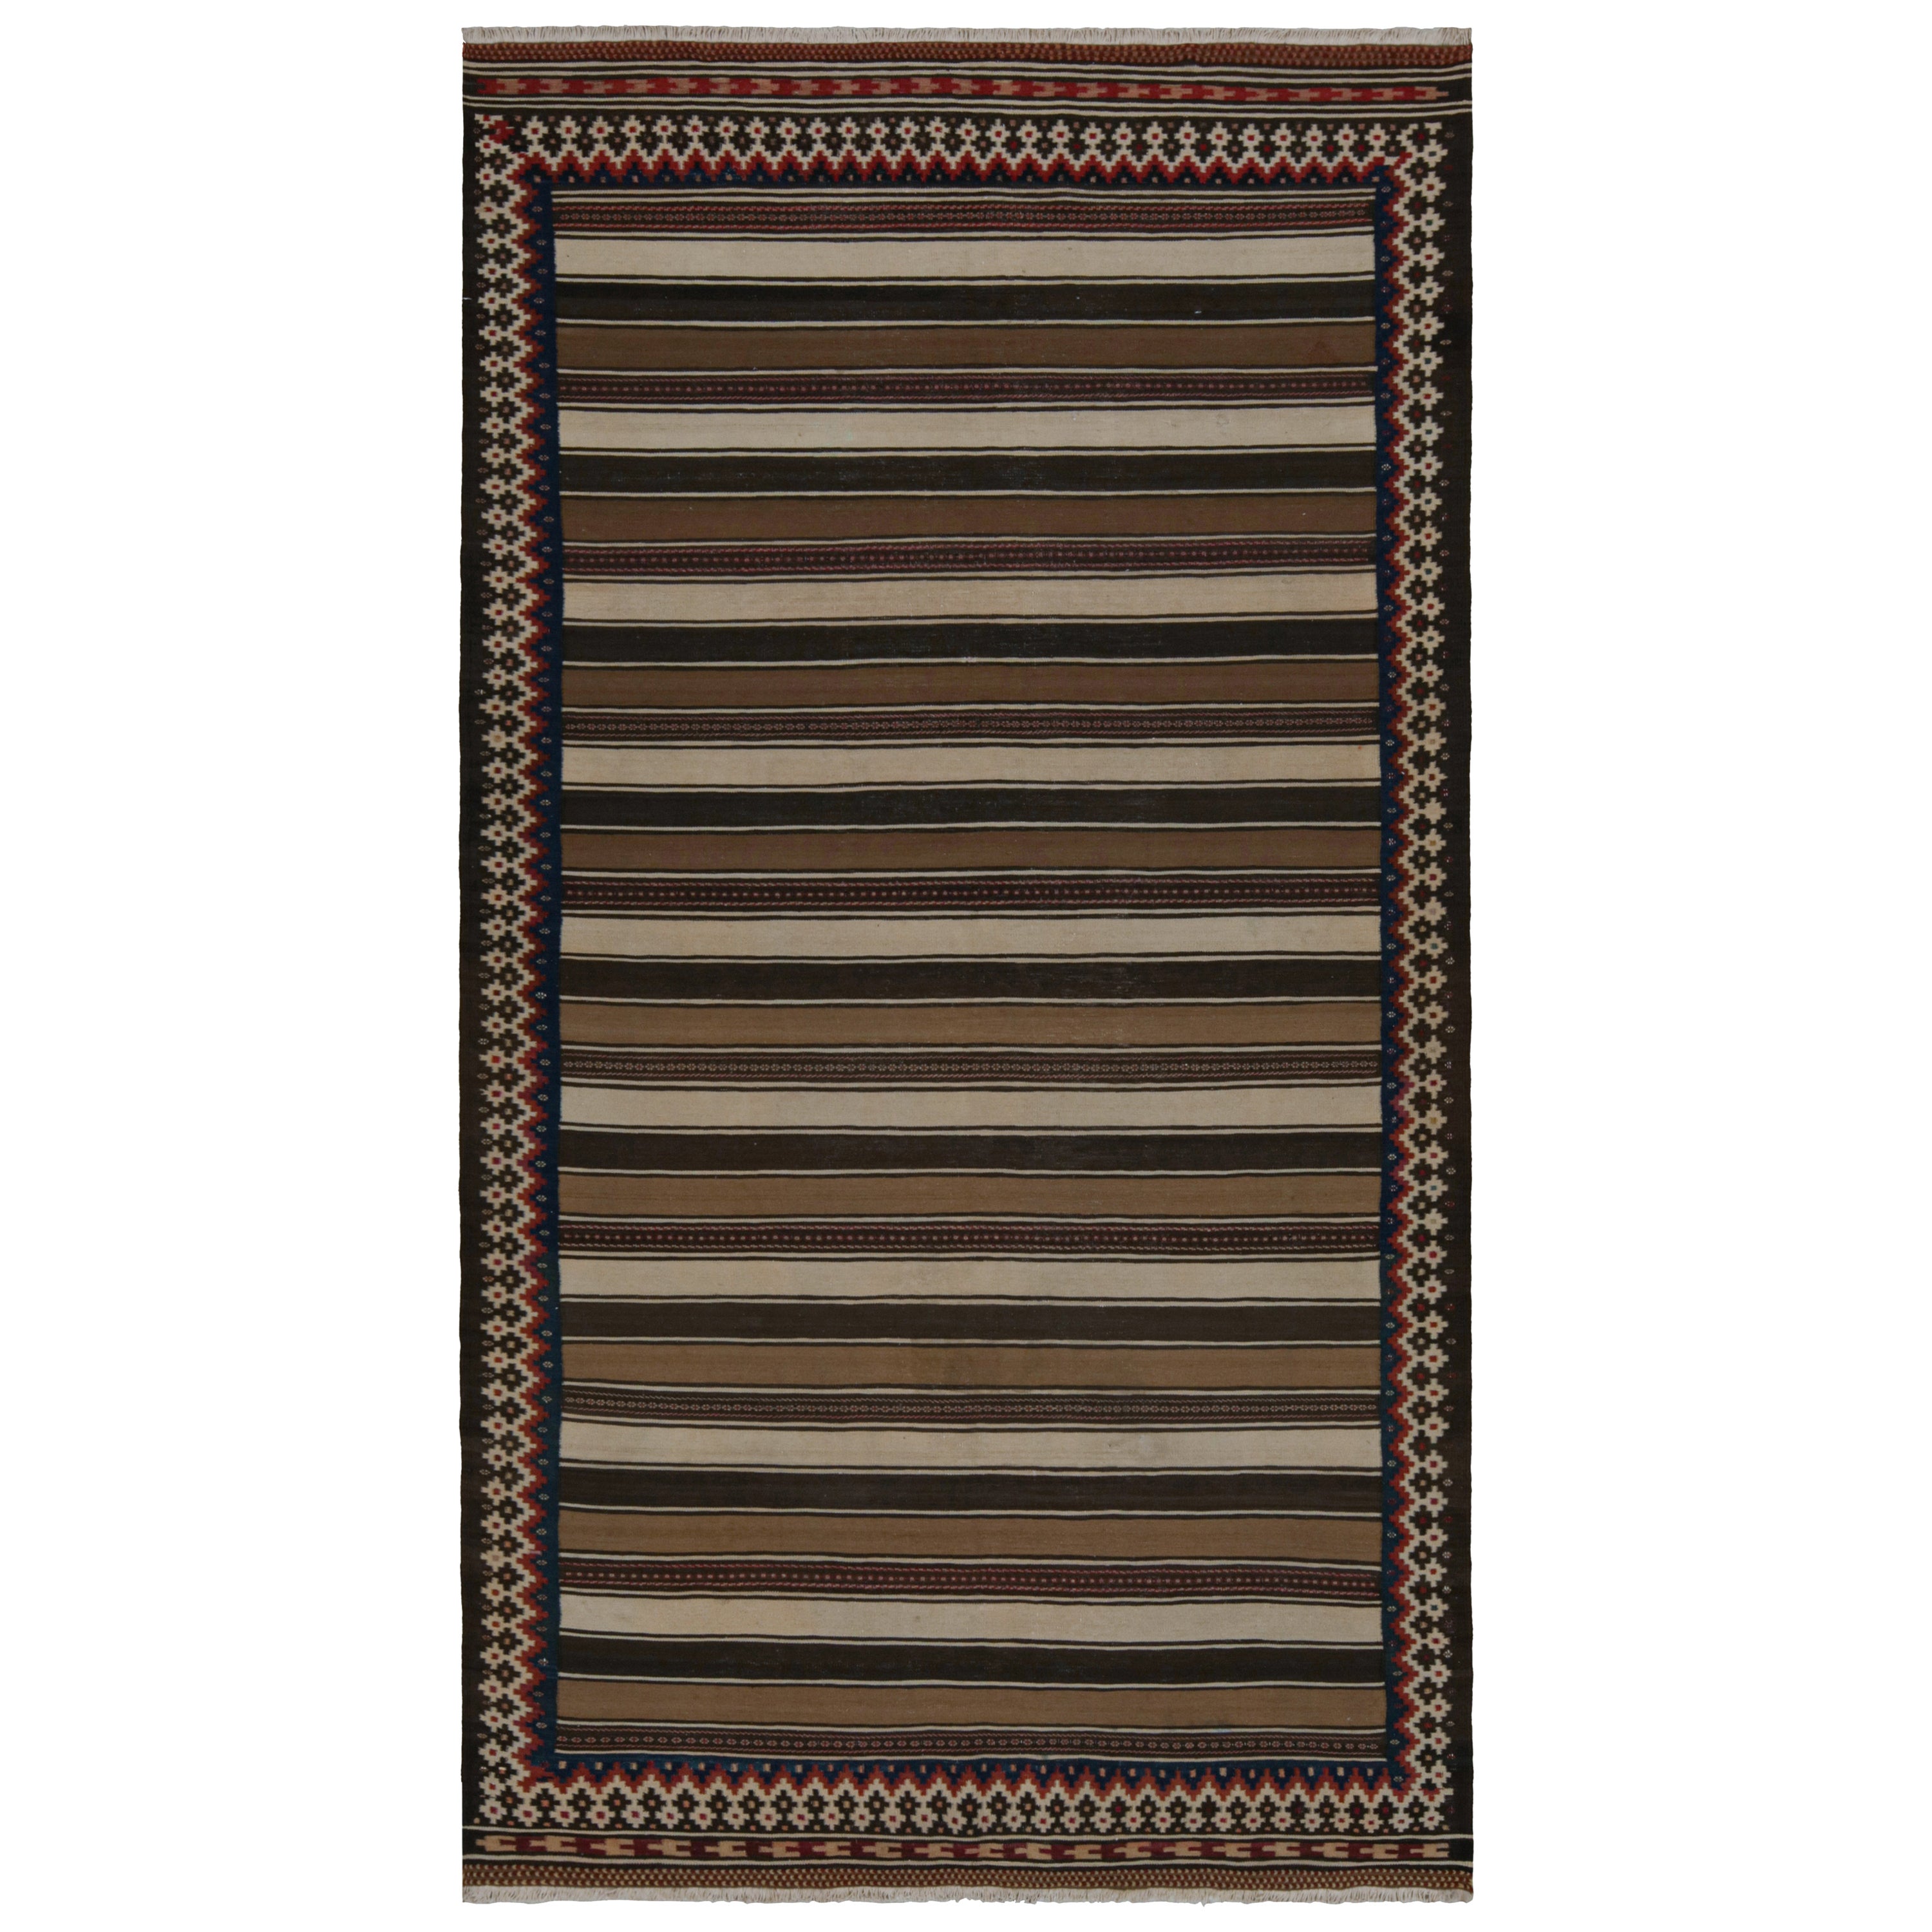 Vintage Afghan Tribal Kilim rug, with Beige/Brown Stripes, from Rug & Kilim For Sale